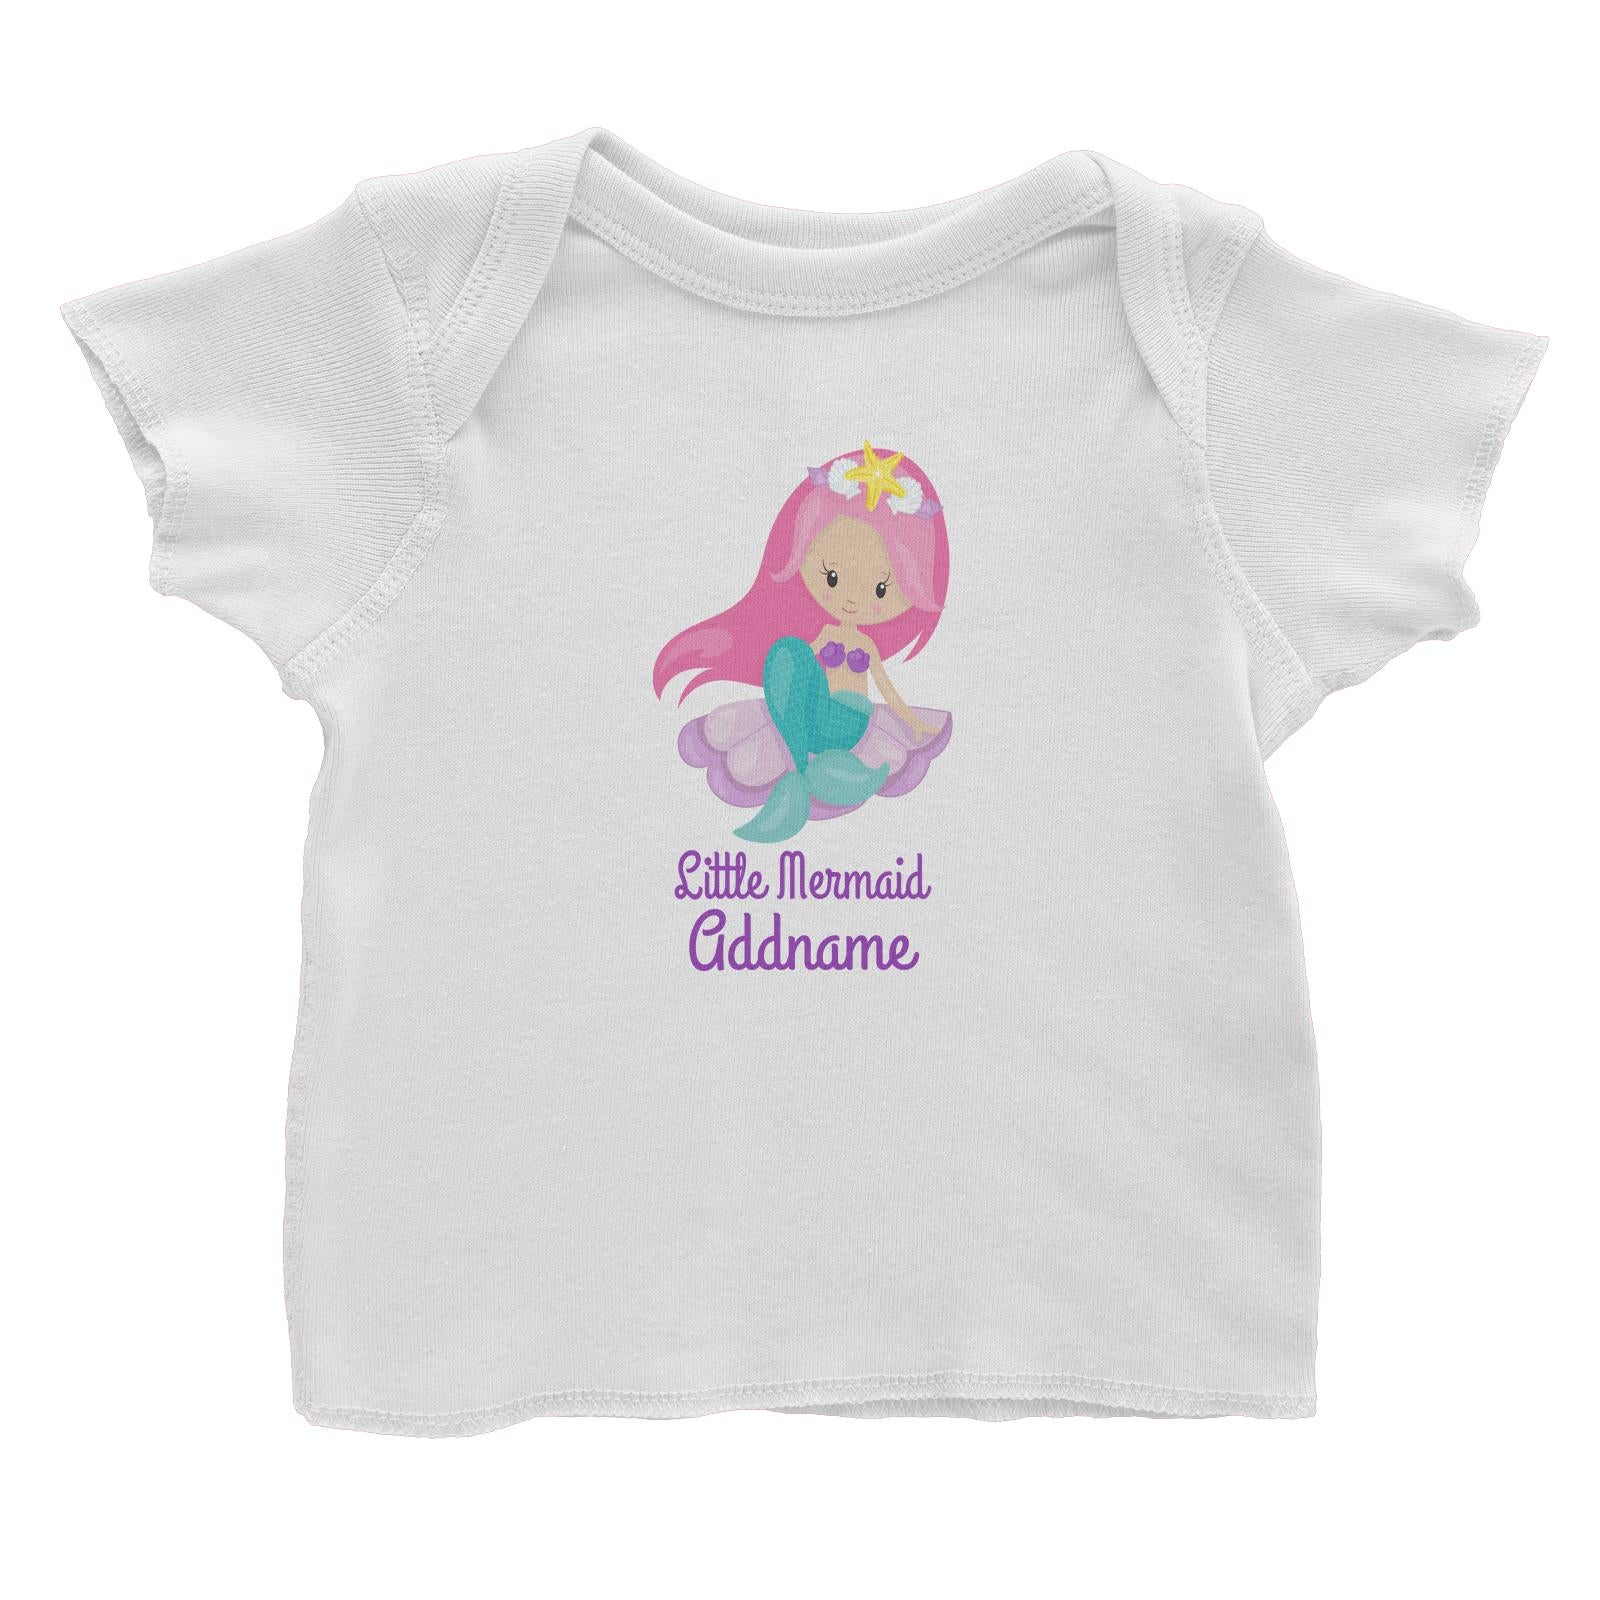 Little Mermaid Sitting Down on Big Seashell Addname Baby T-Shirt